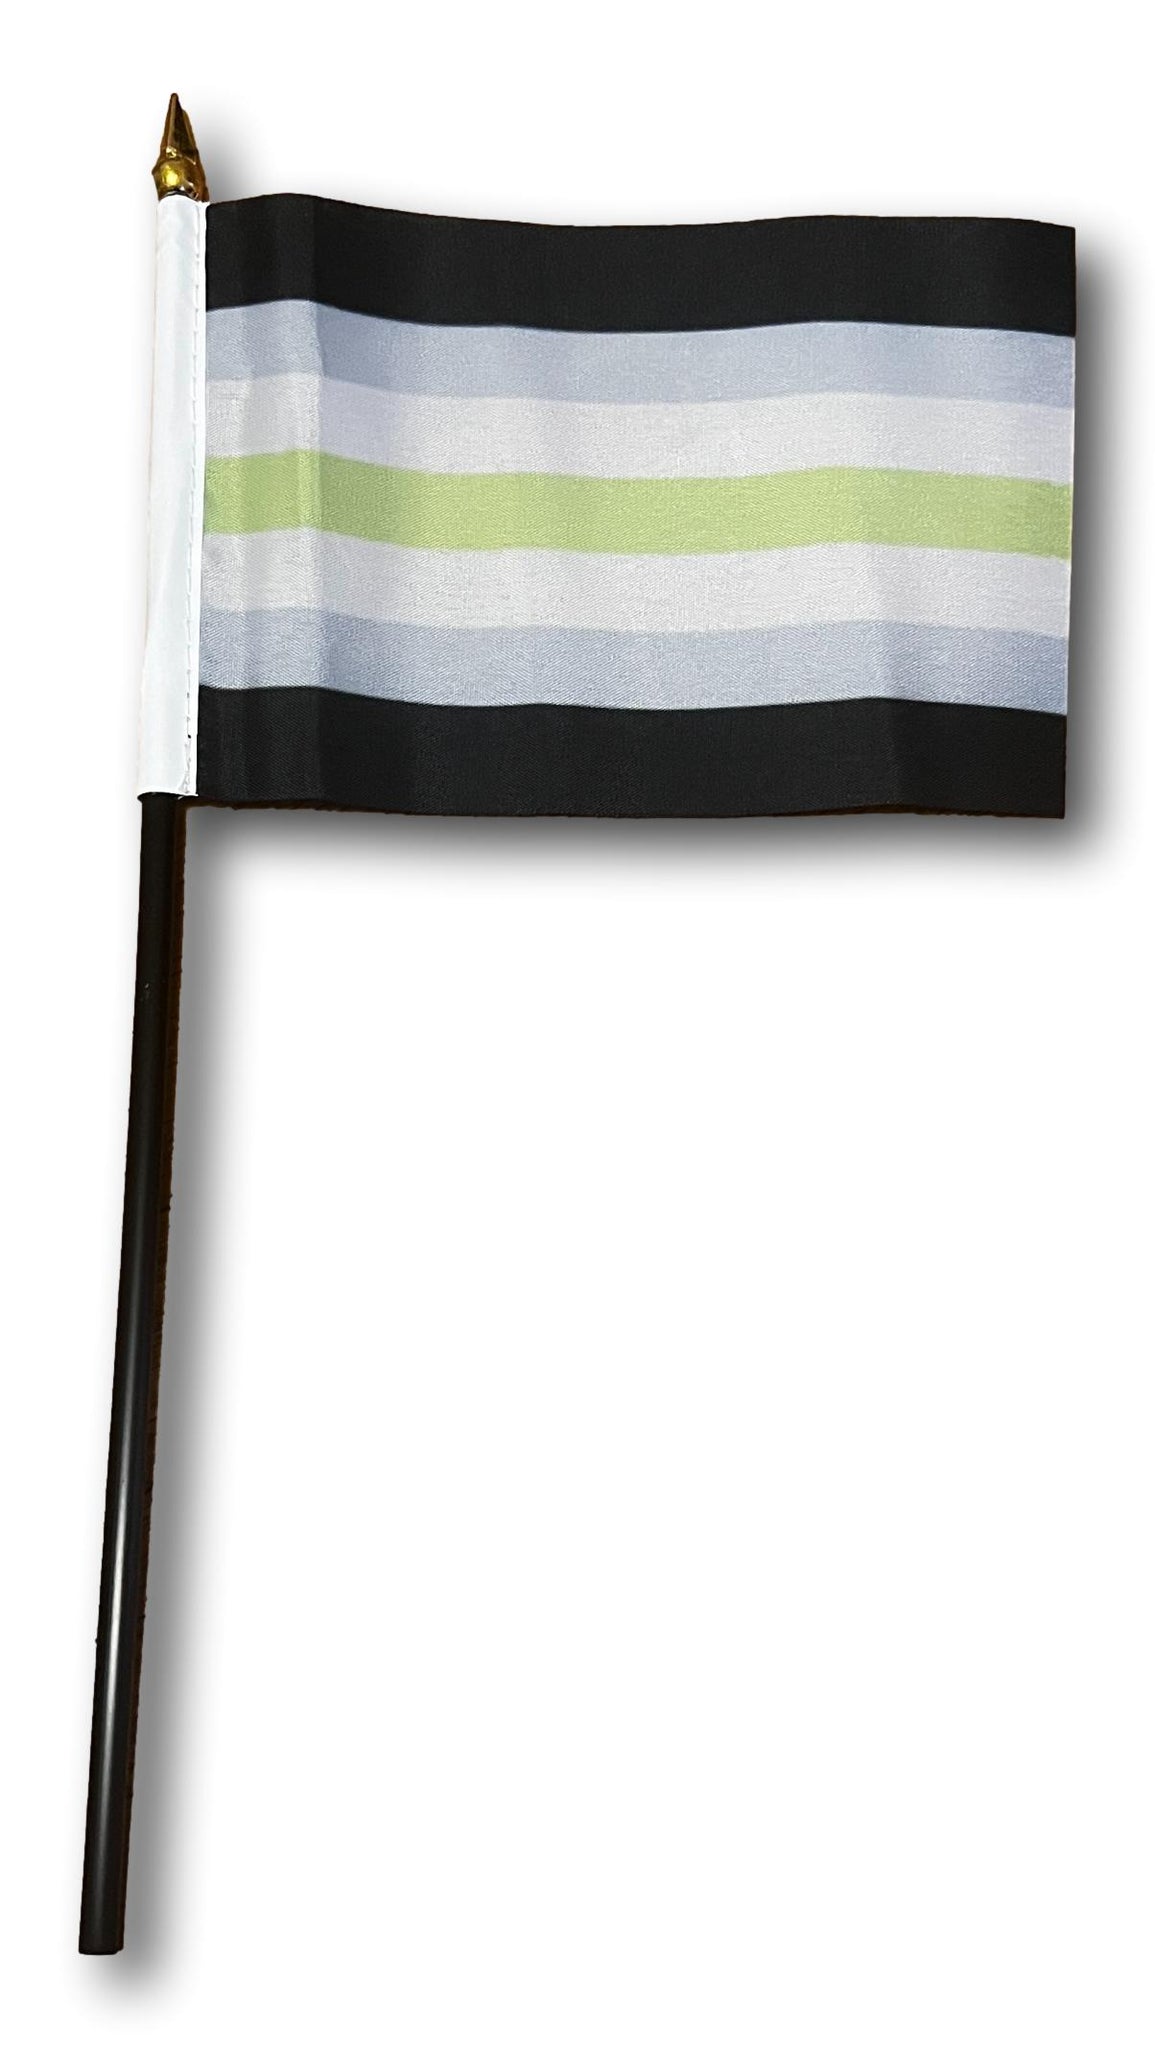 Agender 4" x 6" Single Hand Flag - Screen Printed